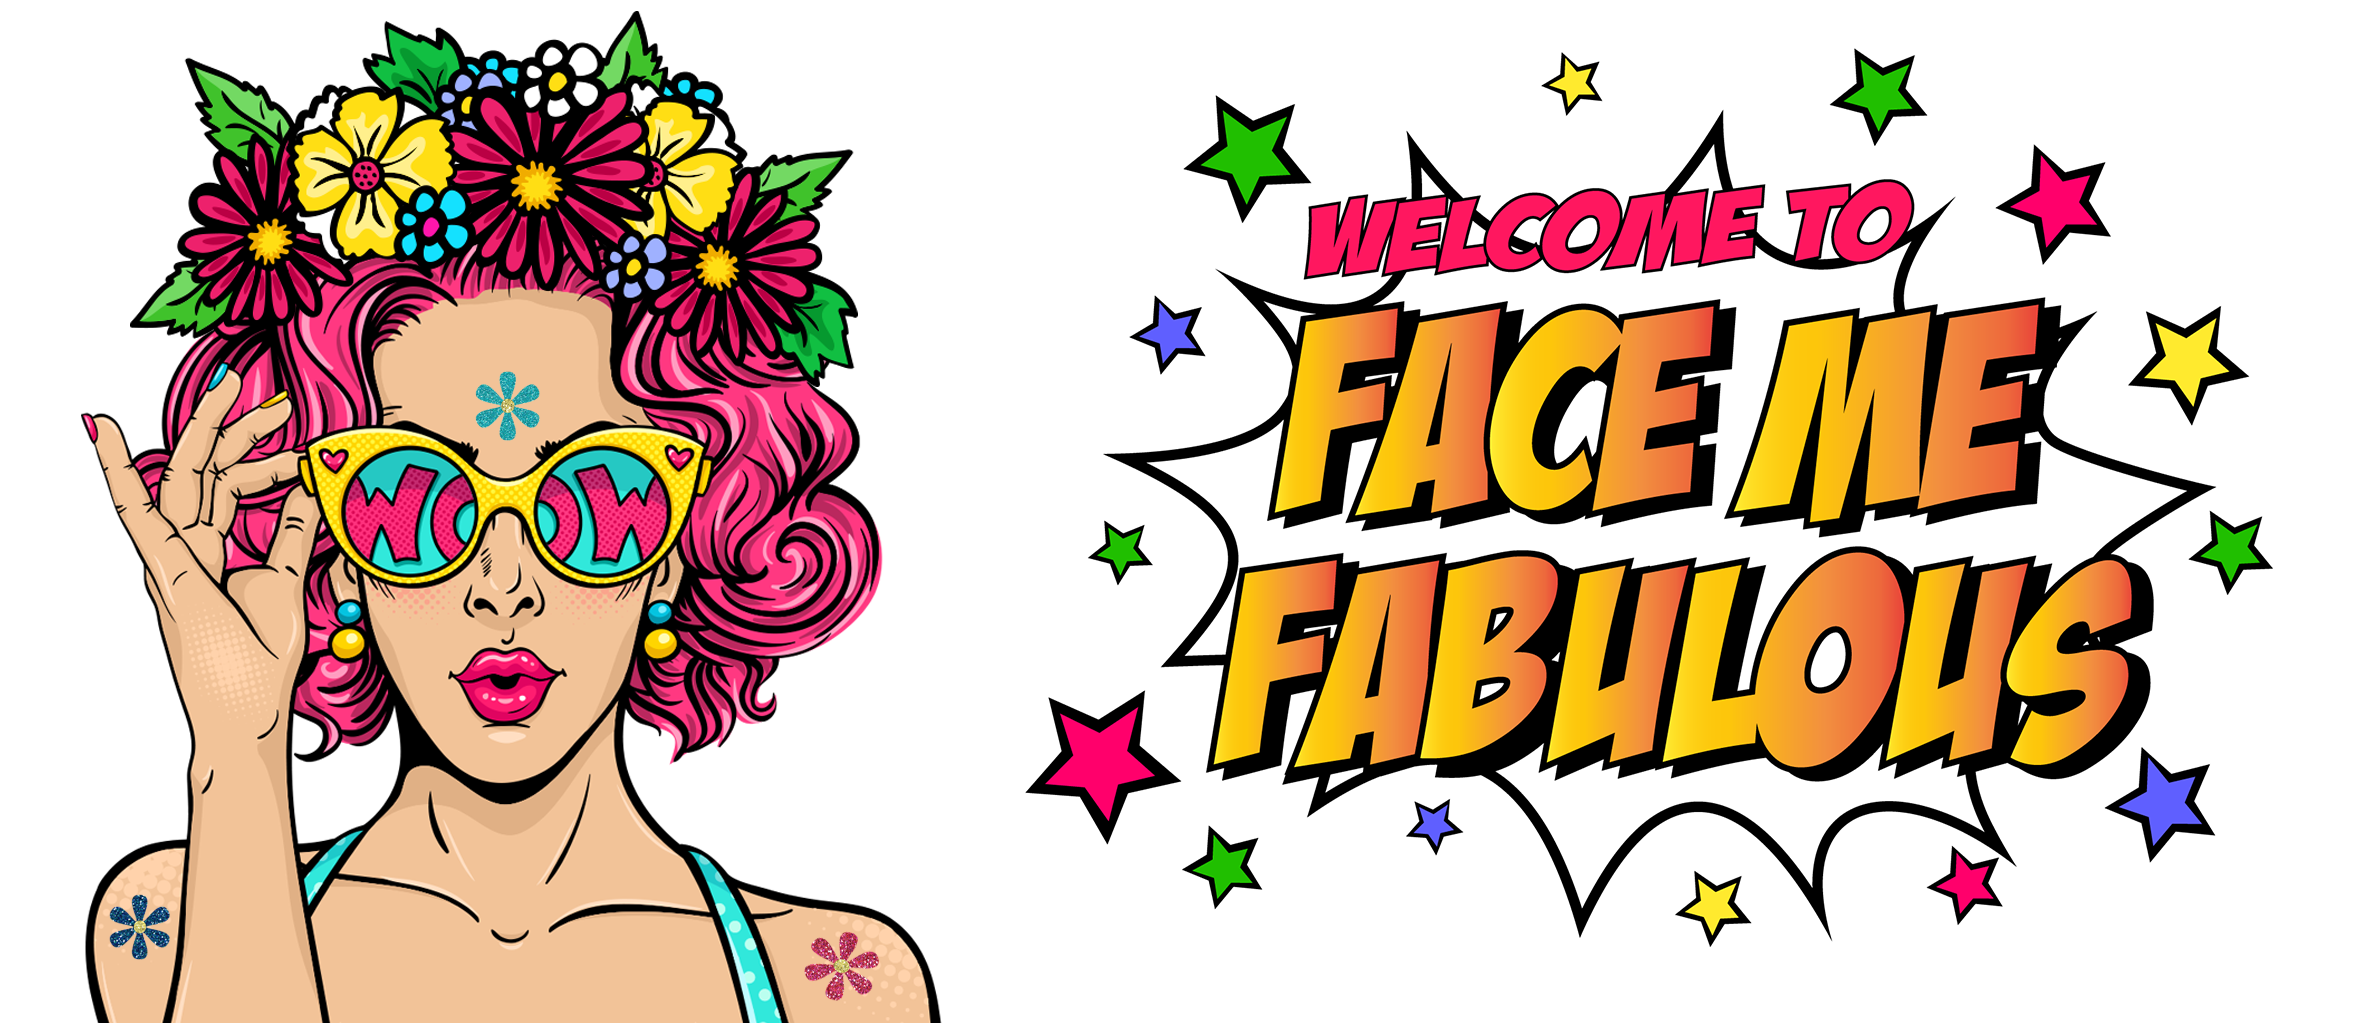 Face Me Fabulous Banner Image